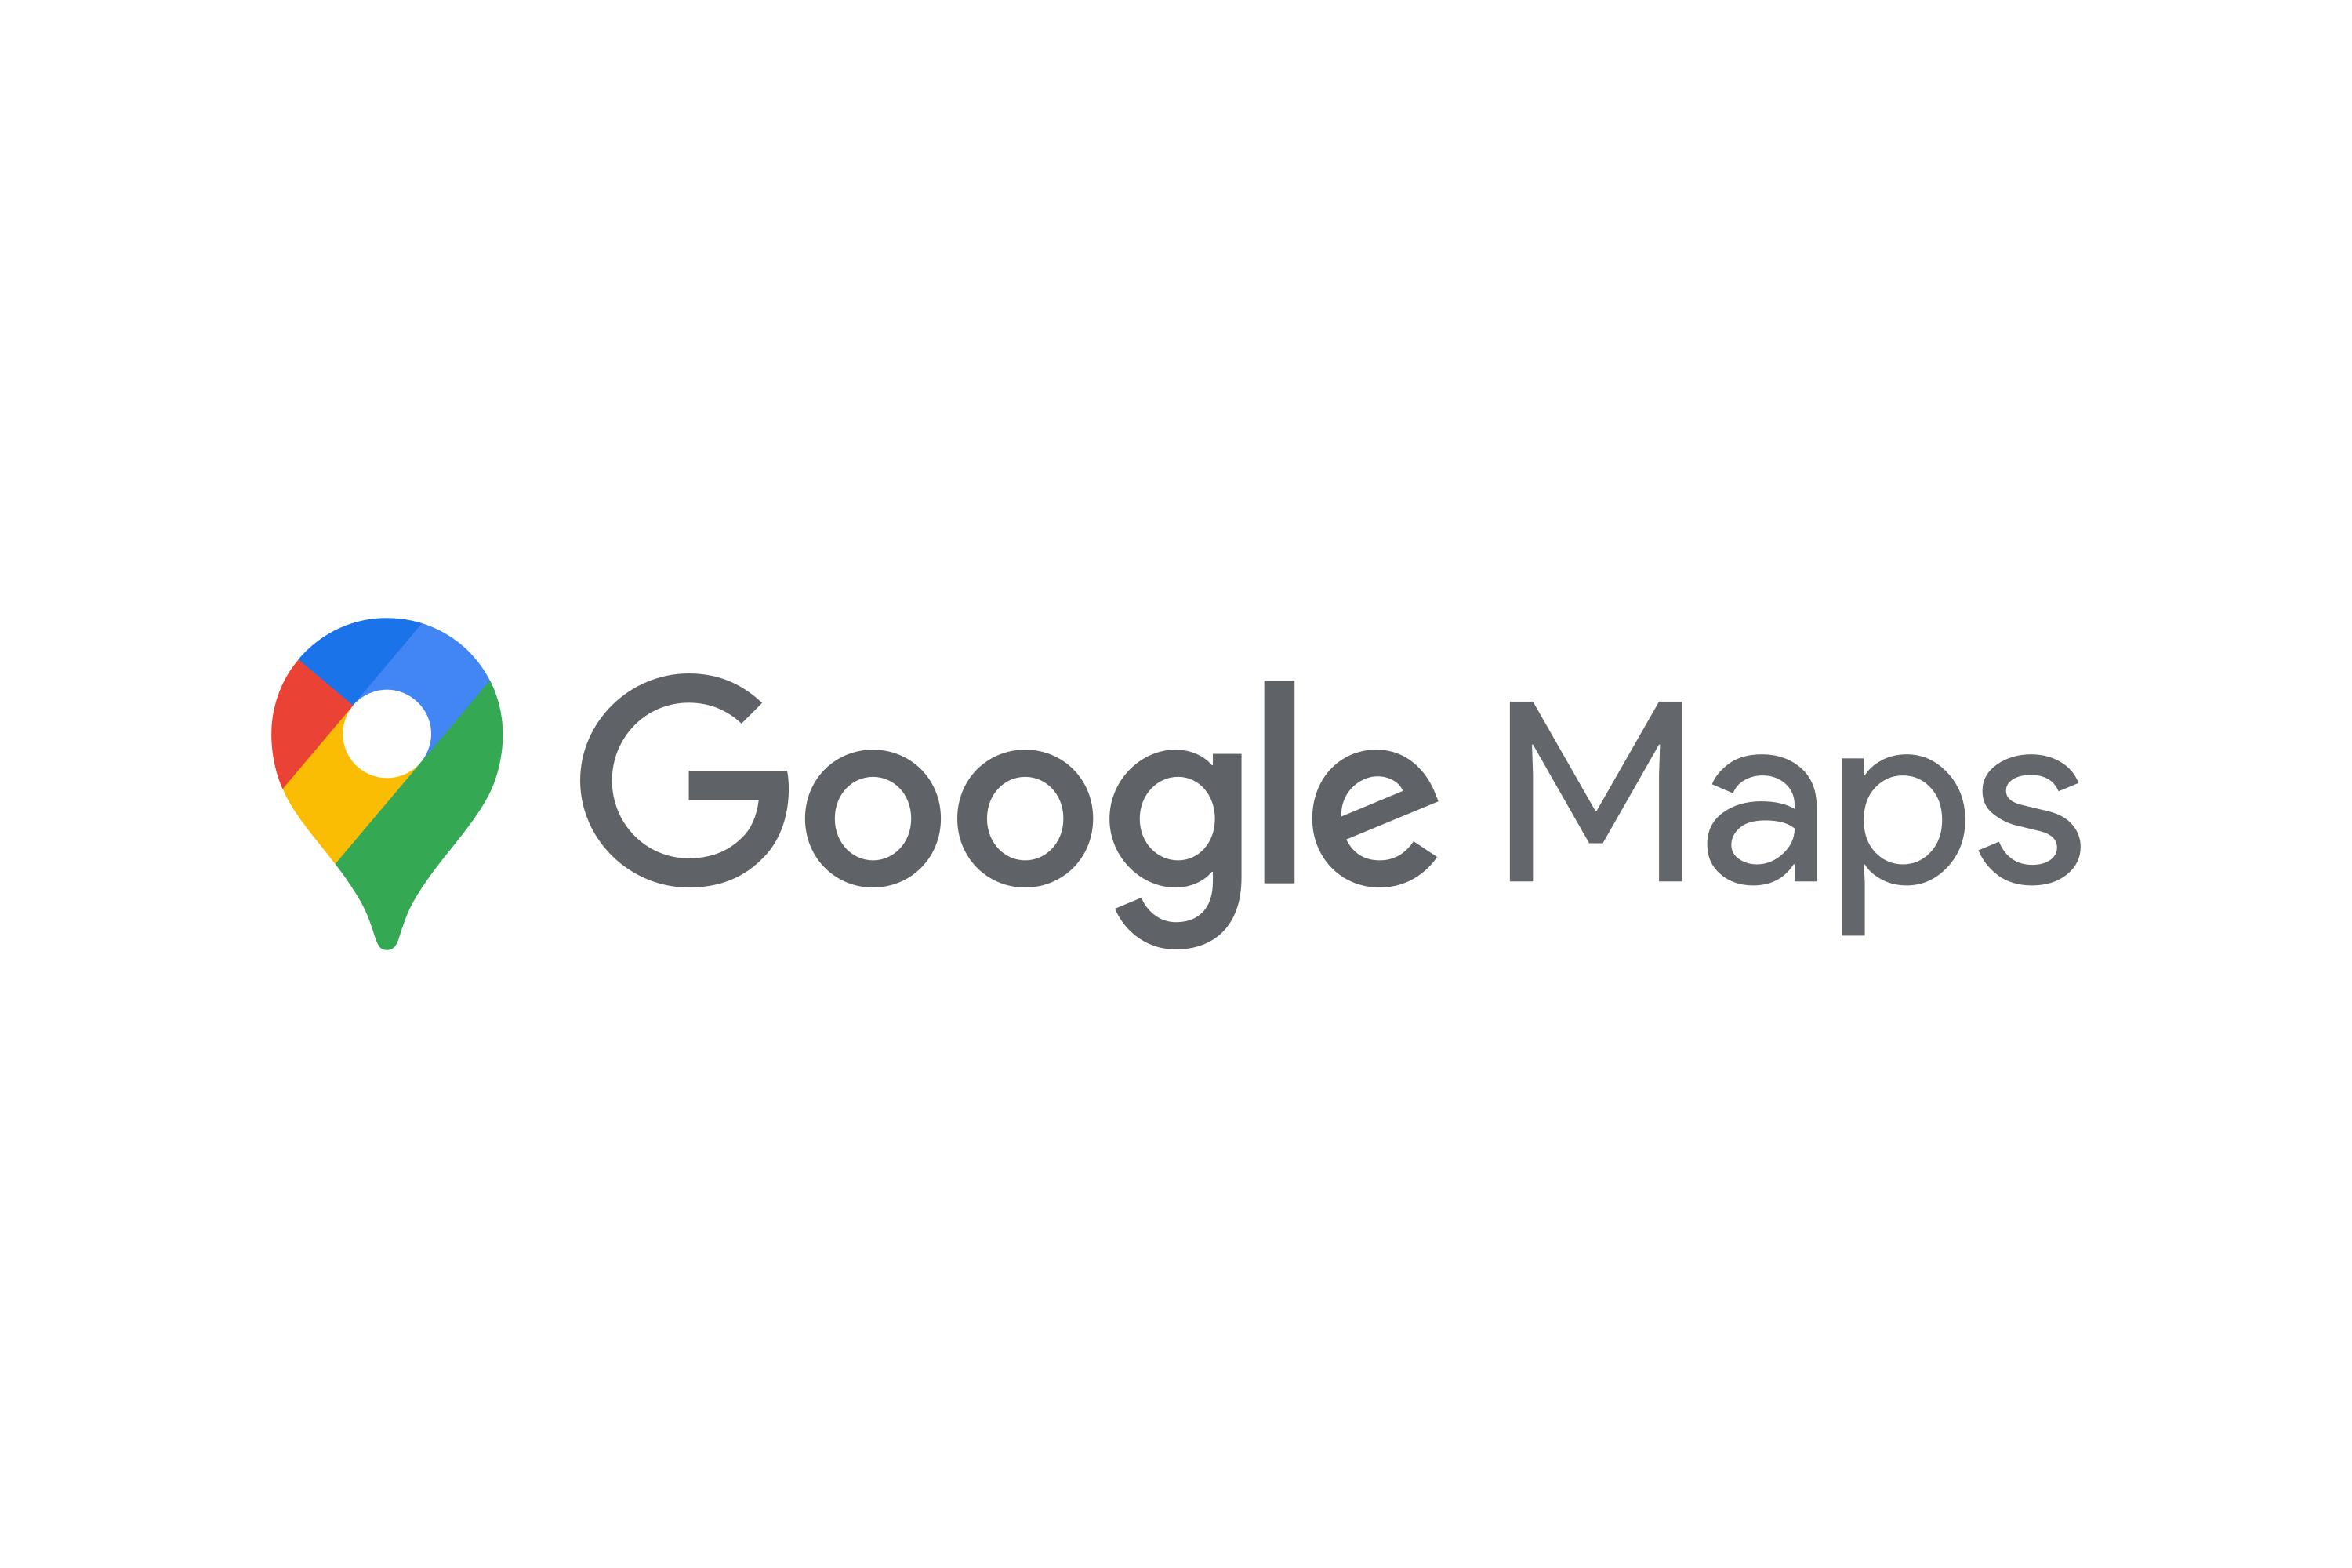 Google Maps PNG HD Image